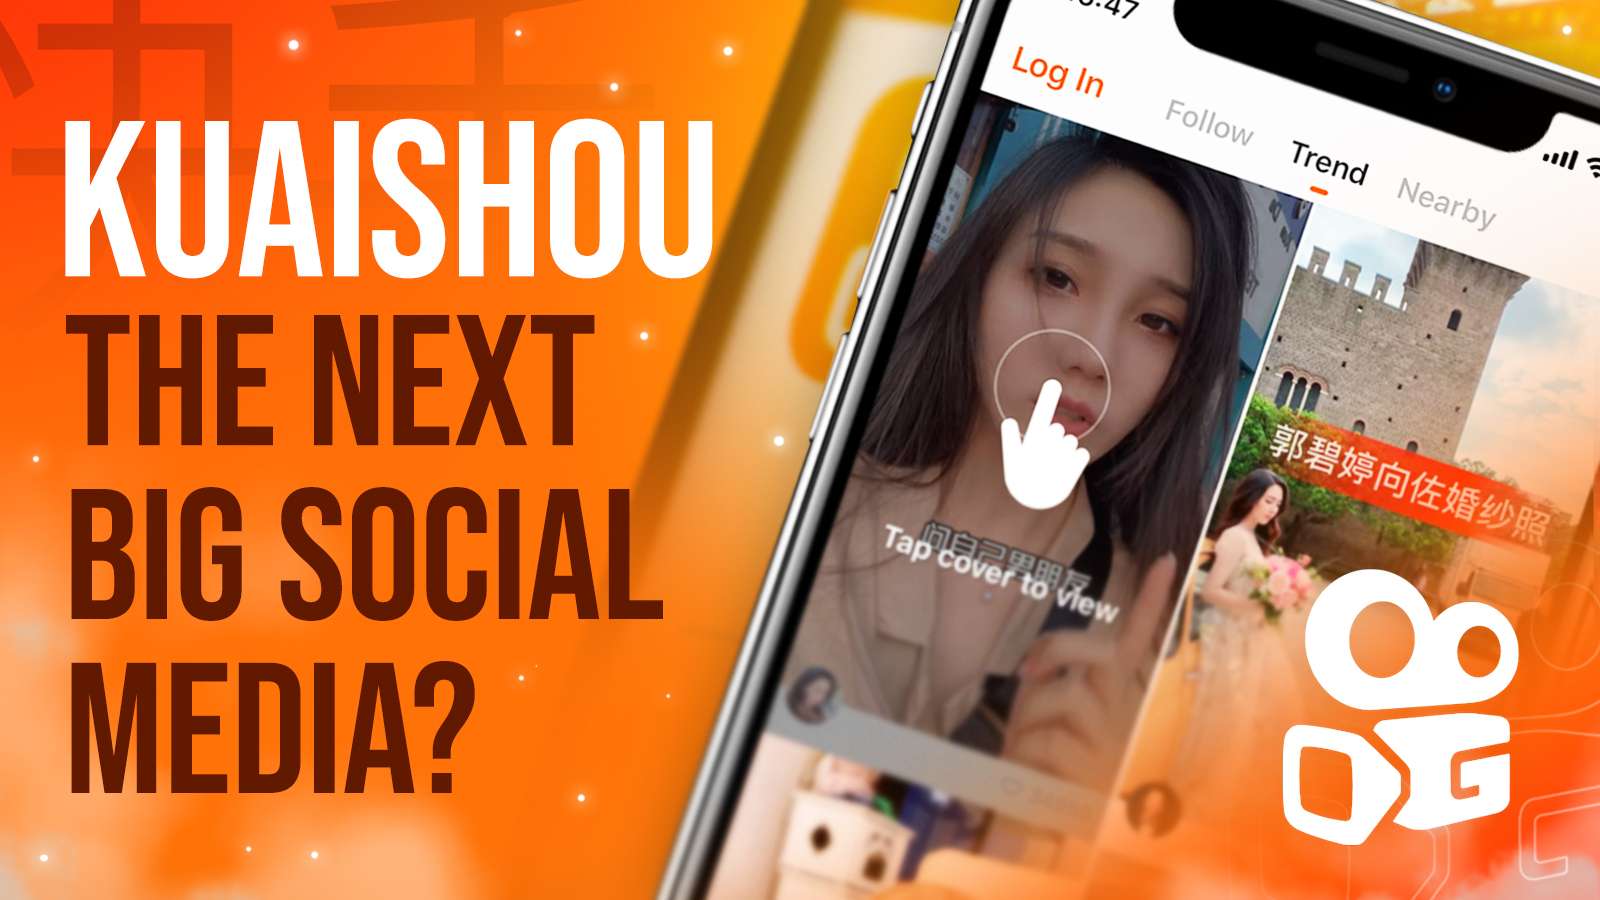 Kuaishou is new short video app